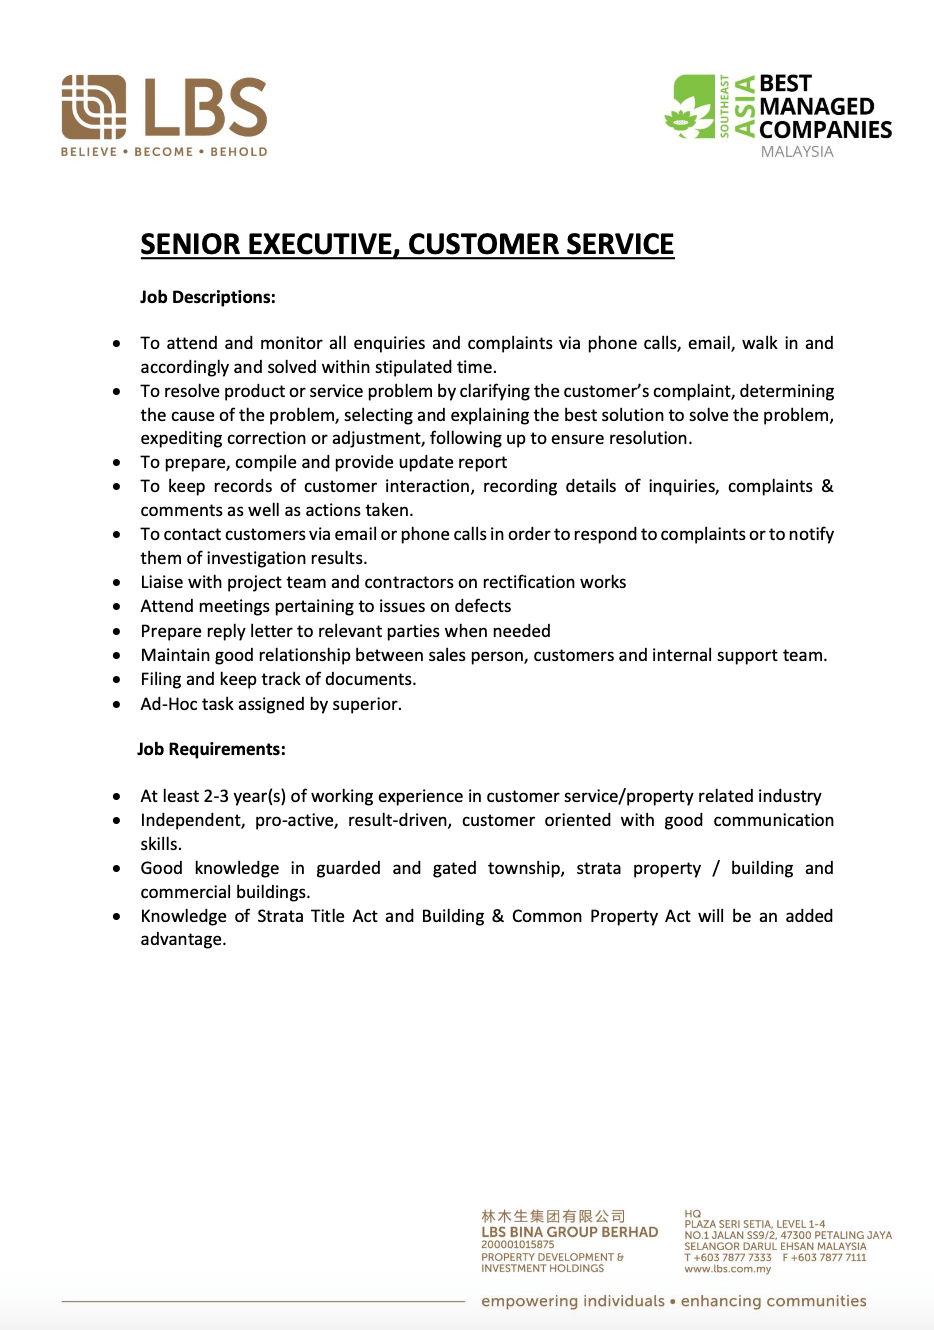 Senior Executive, Customer Relations 